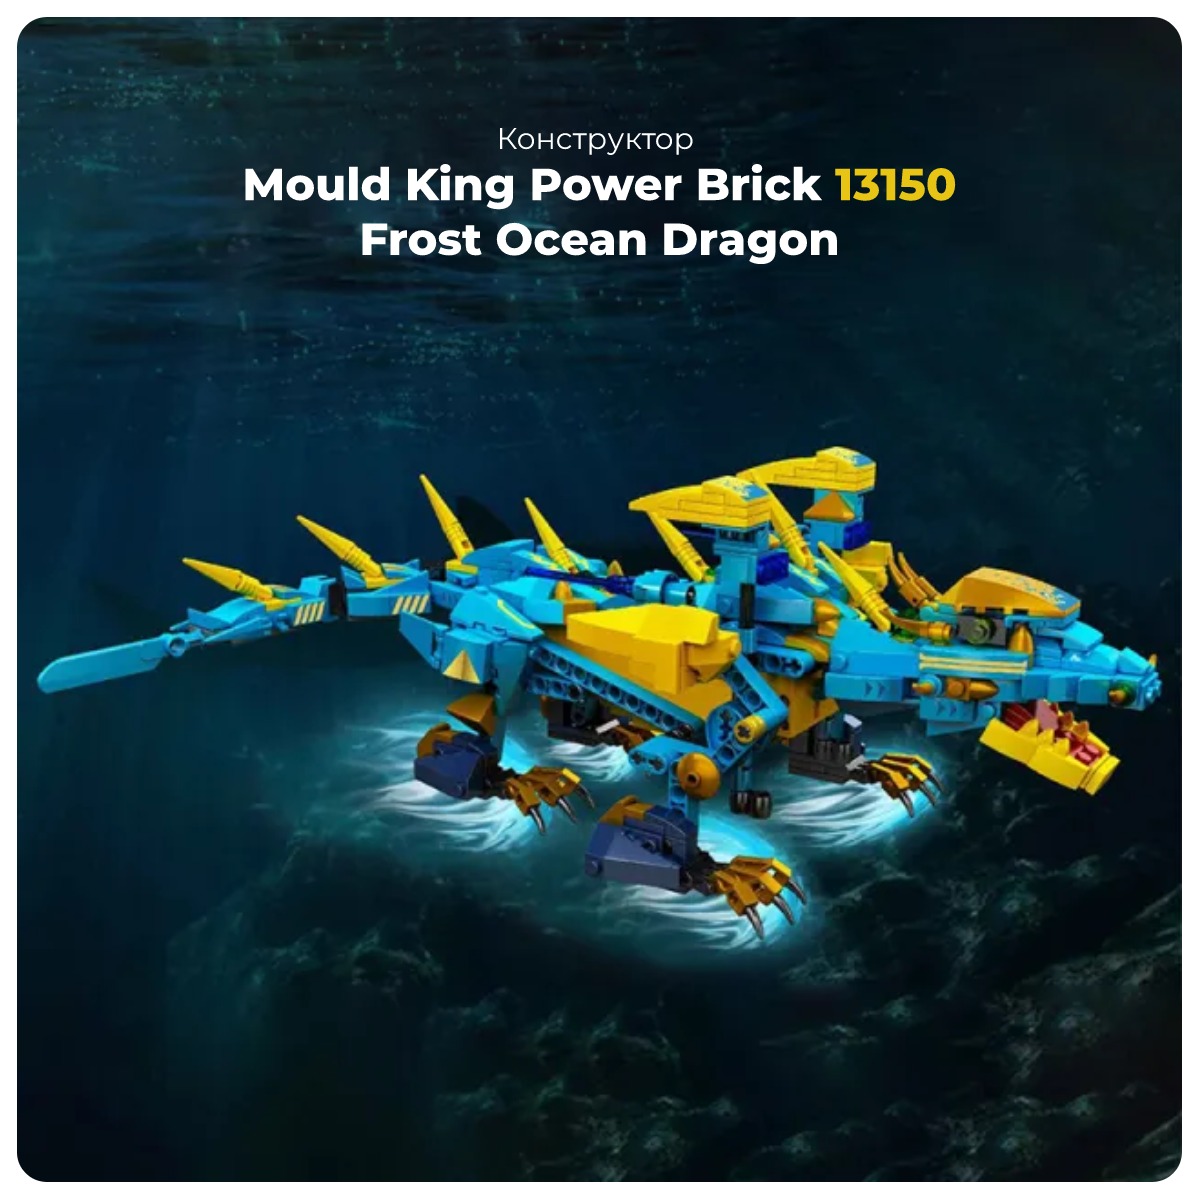 Mould-King-Power-Brick-13150-Frost-Ocean-Dragon-01